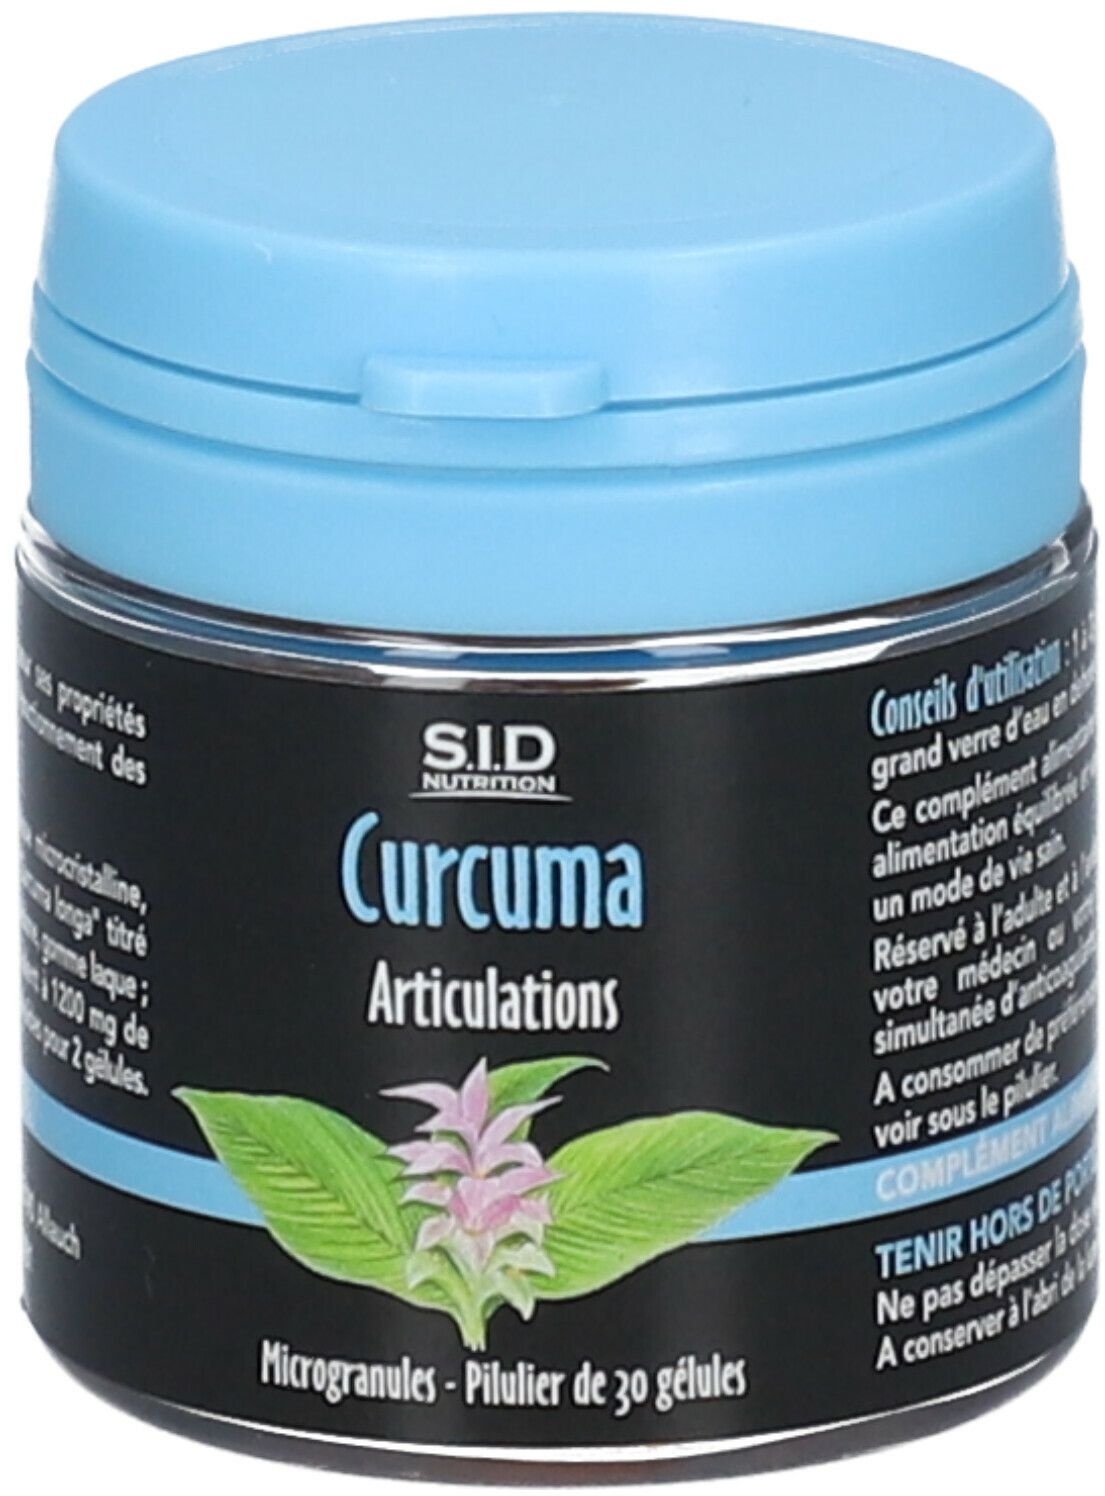 SID Nutrition Curcuma 30 pc(s) capsule(s)